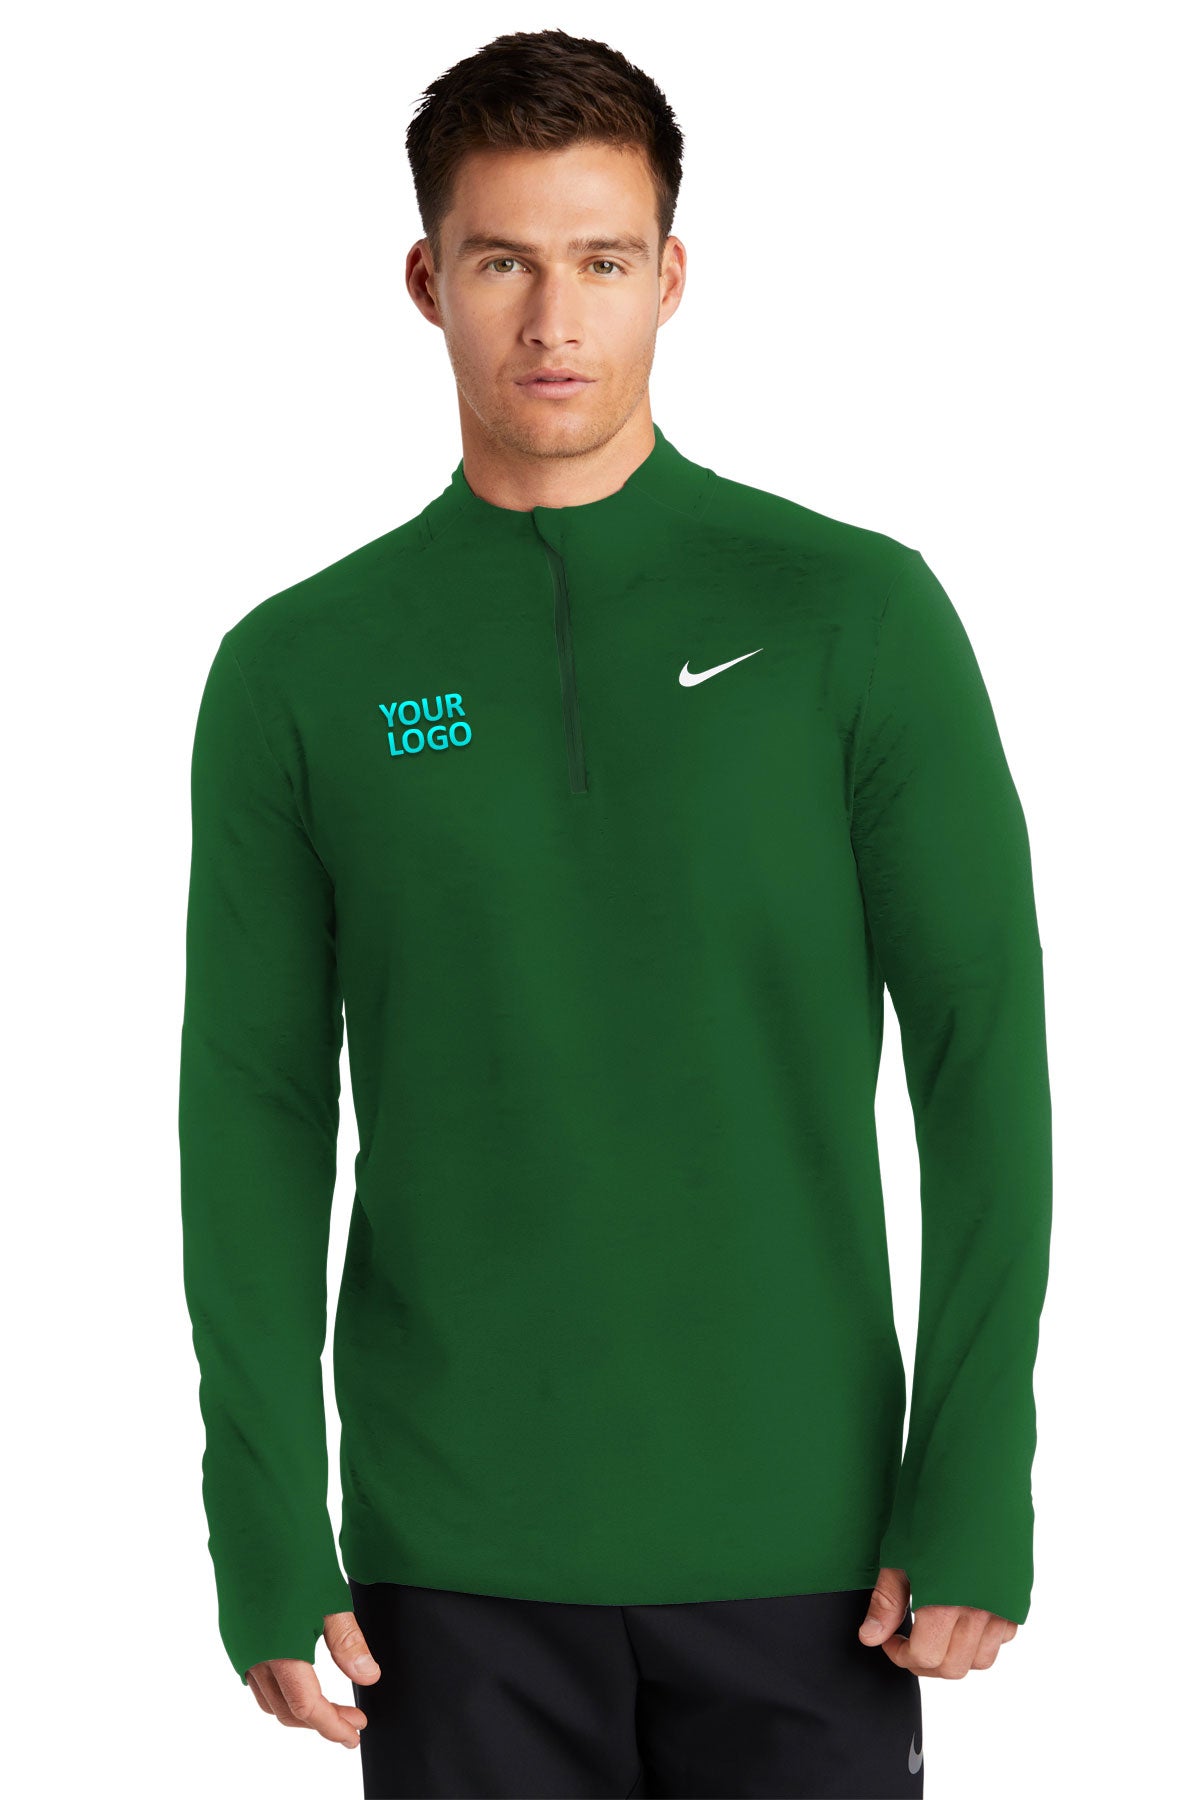 Nike Dark Green NKDH4949 custom logo sweatshirts embroidered